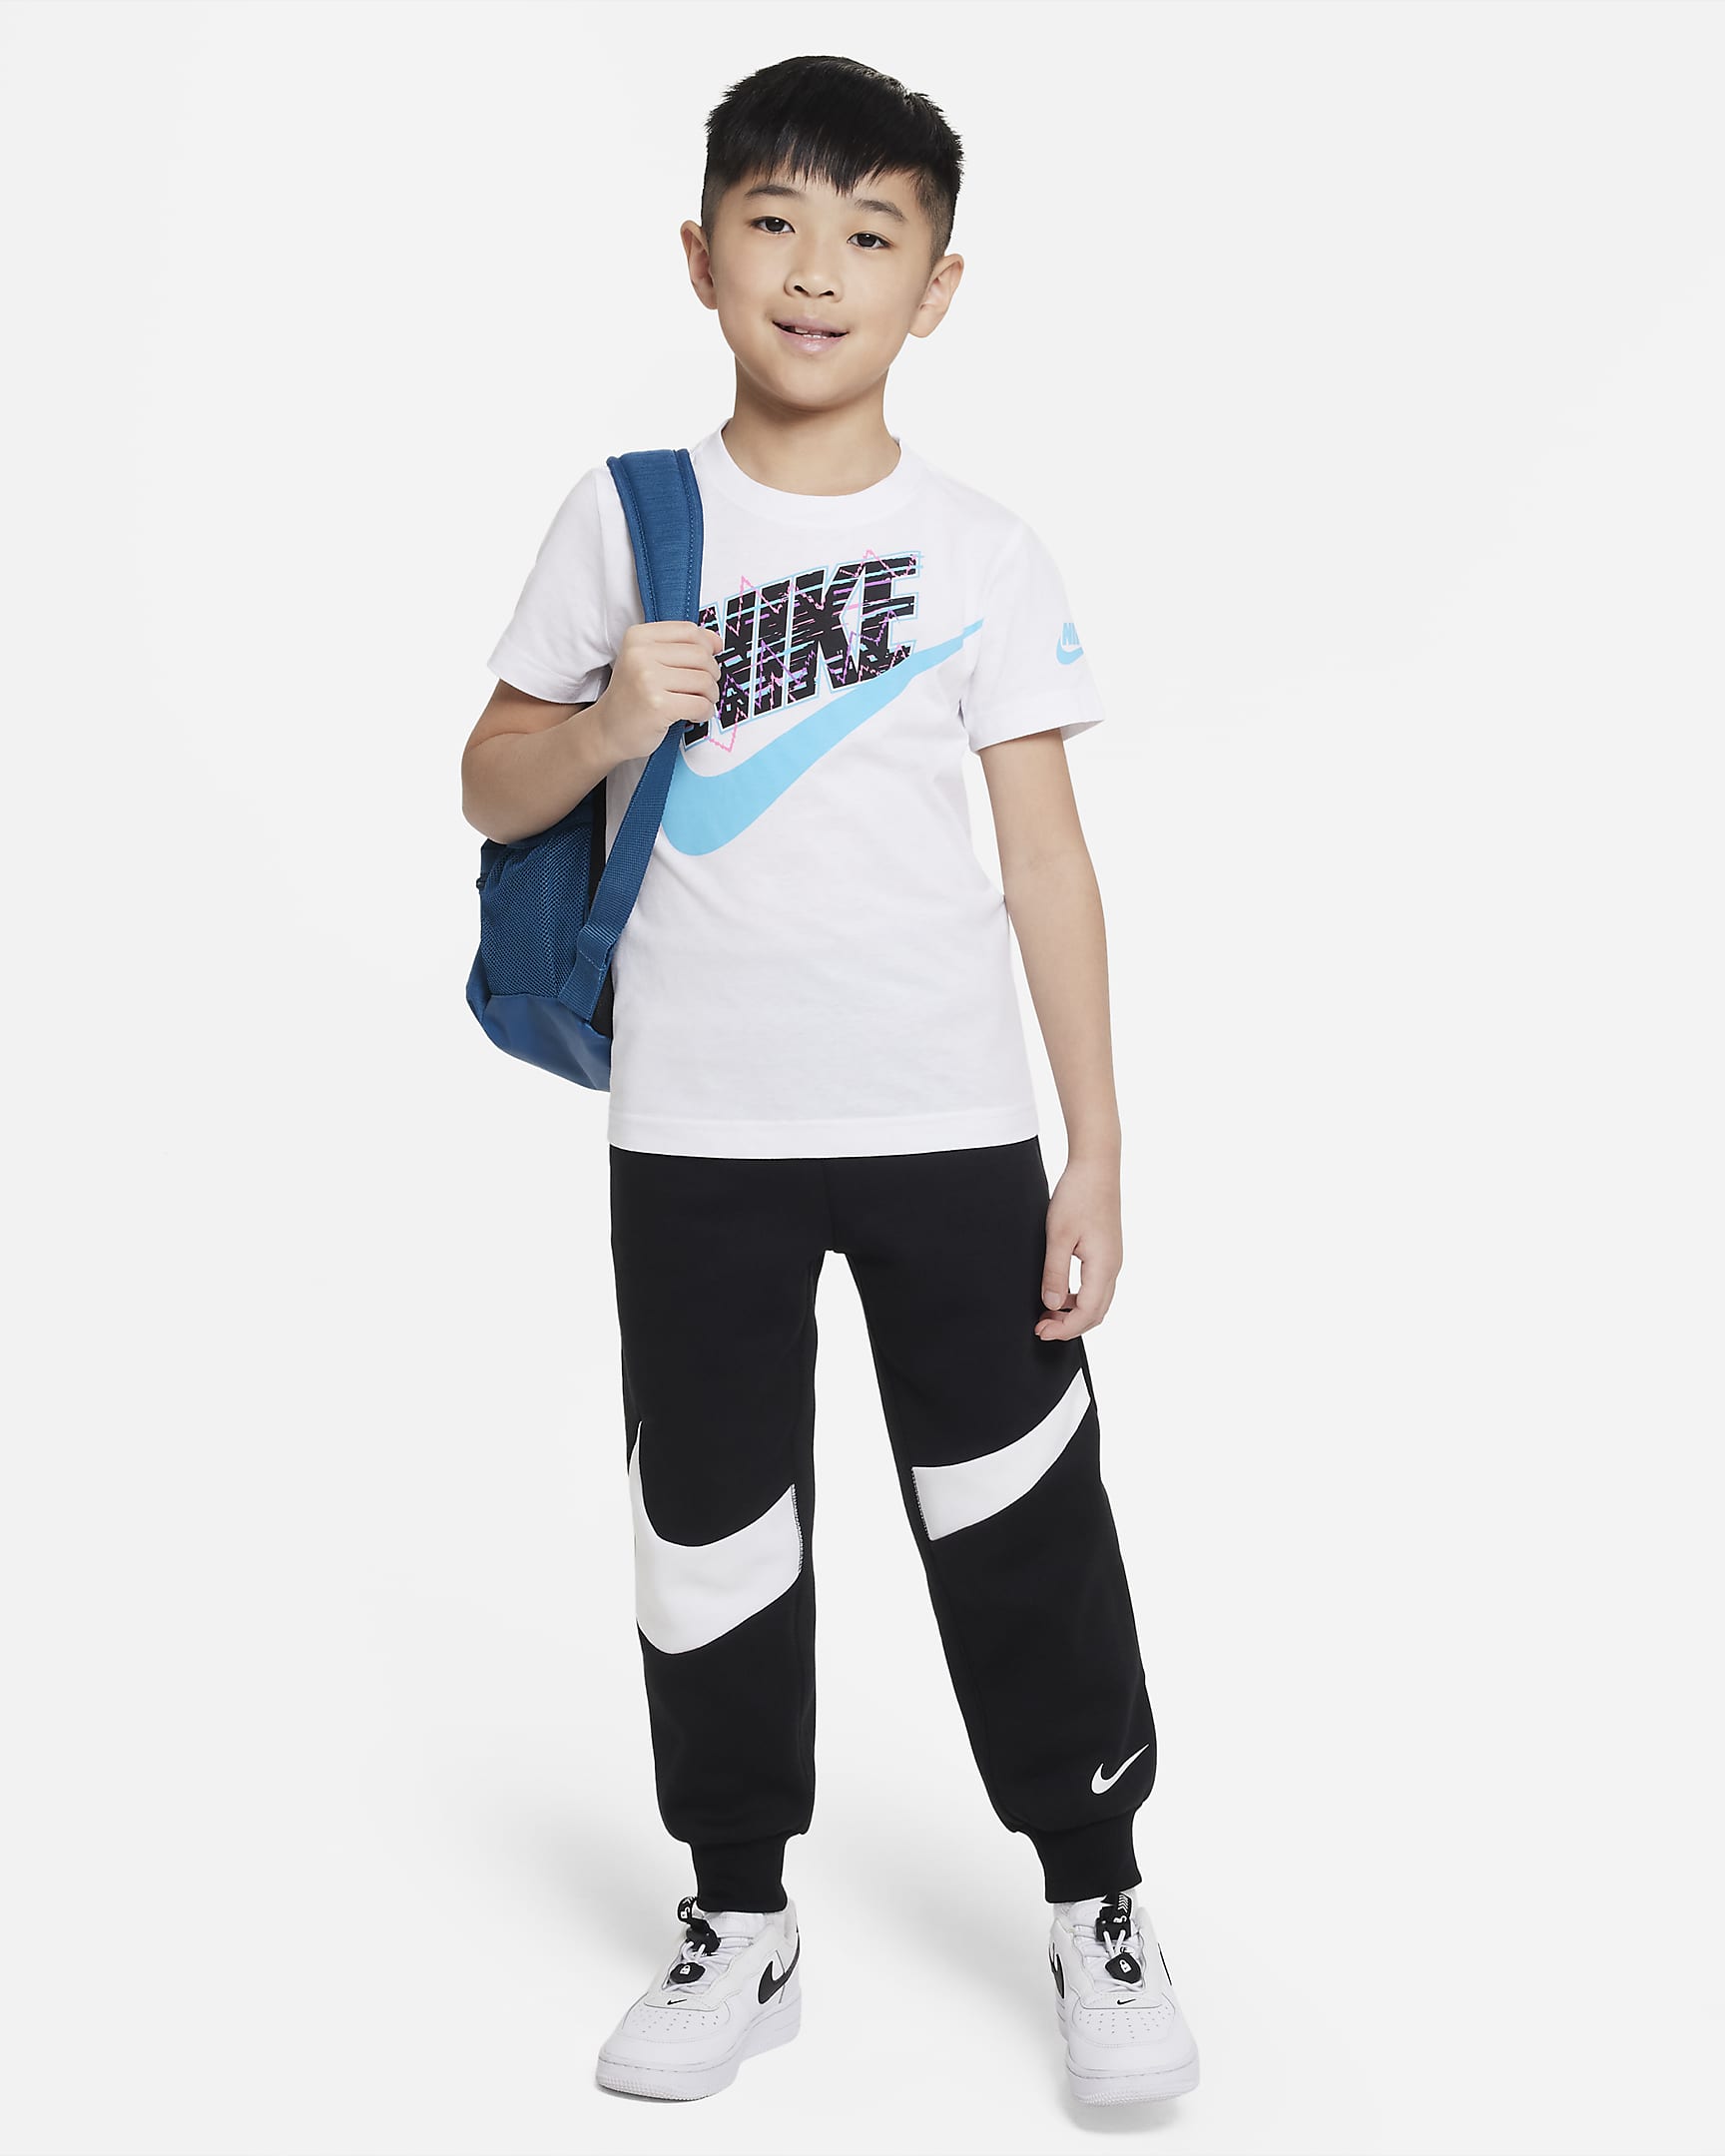 Nike New Wave Futura Tee Little Kids' T-Shirt. Nike.com